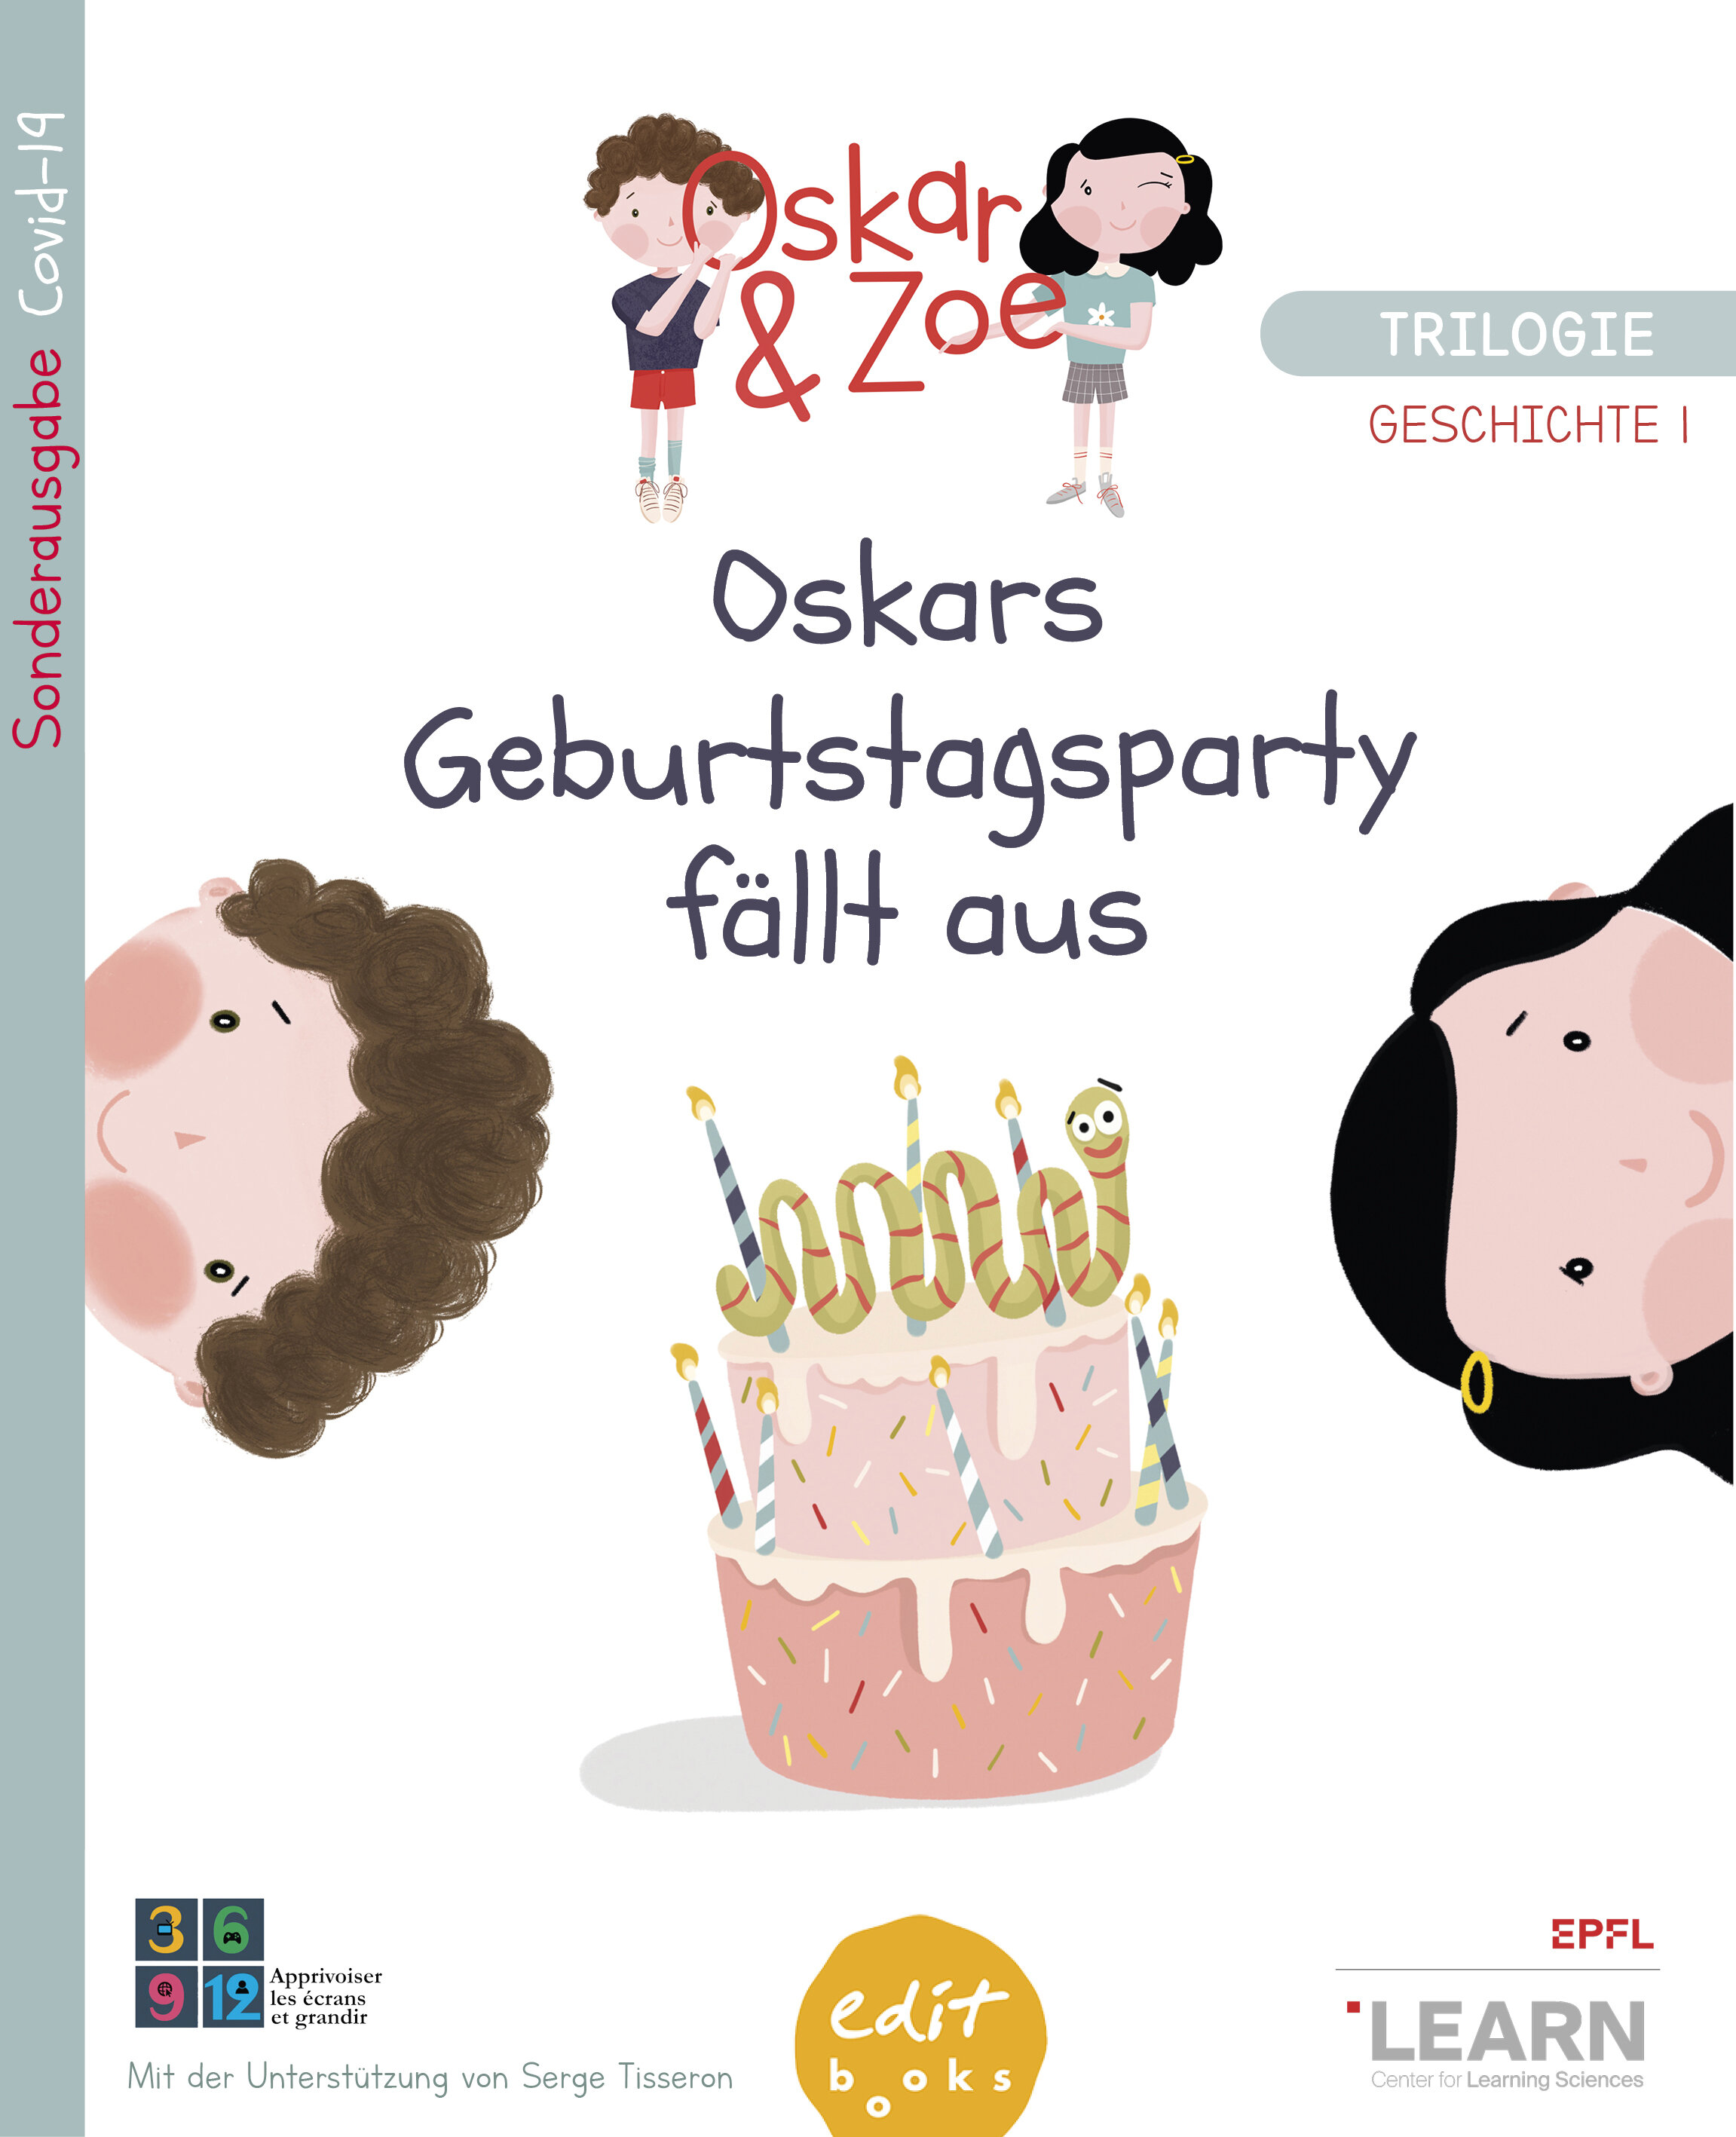 Oscar und Zoe_Oskars Geburtstagsparty_GER_COVER.jpg